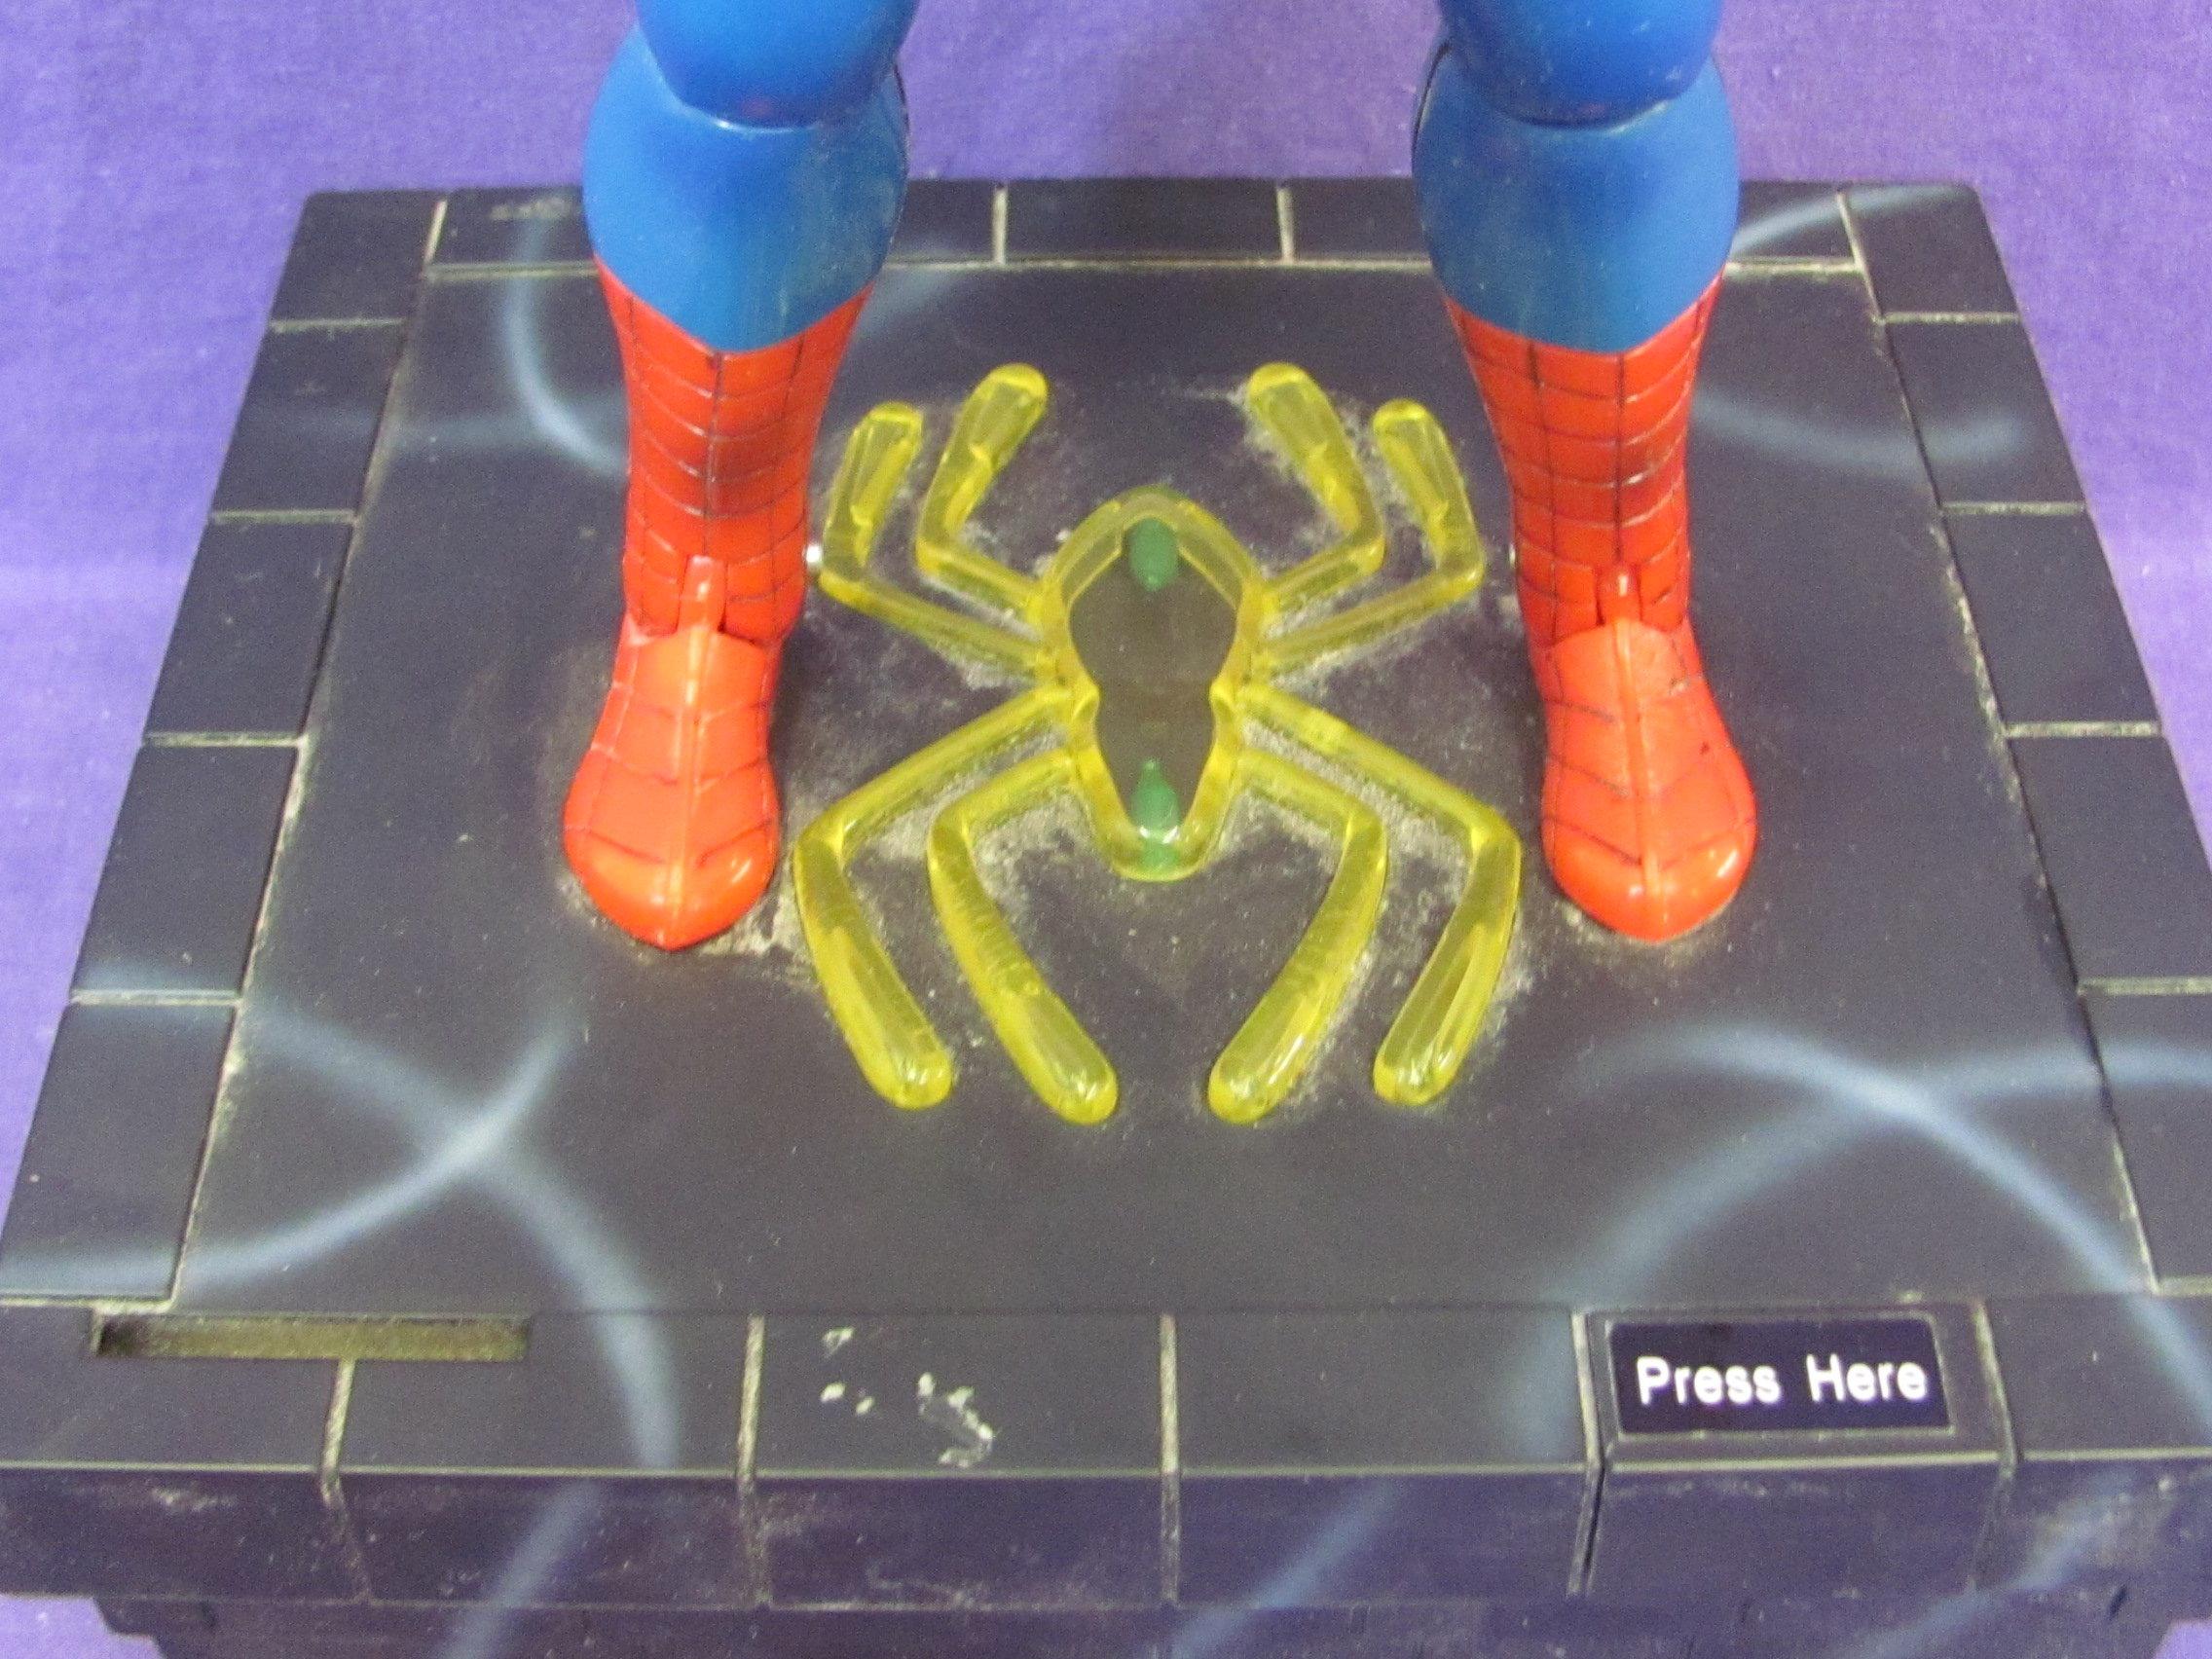 2002 Spider-Man Figurine – Battery-Op – Moves & Talks – Spider Lights Up – 11 1/2” tall